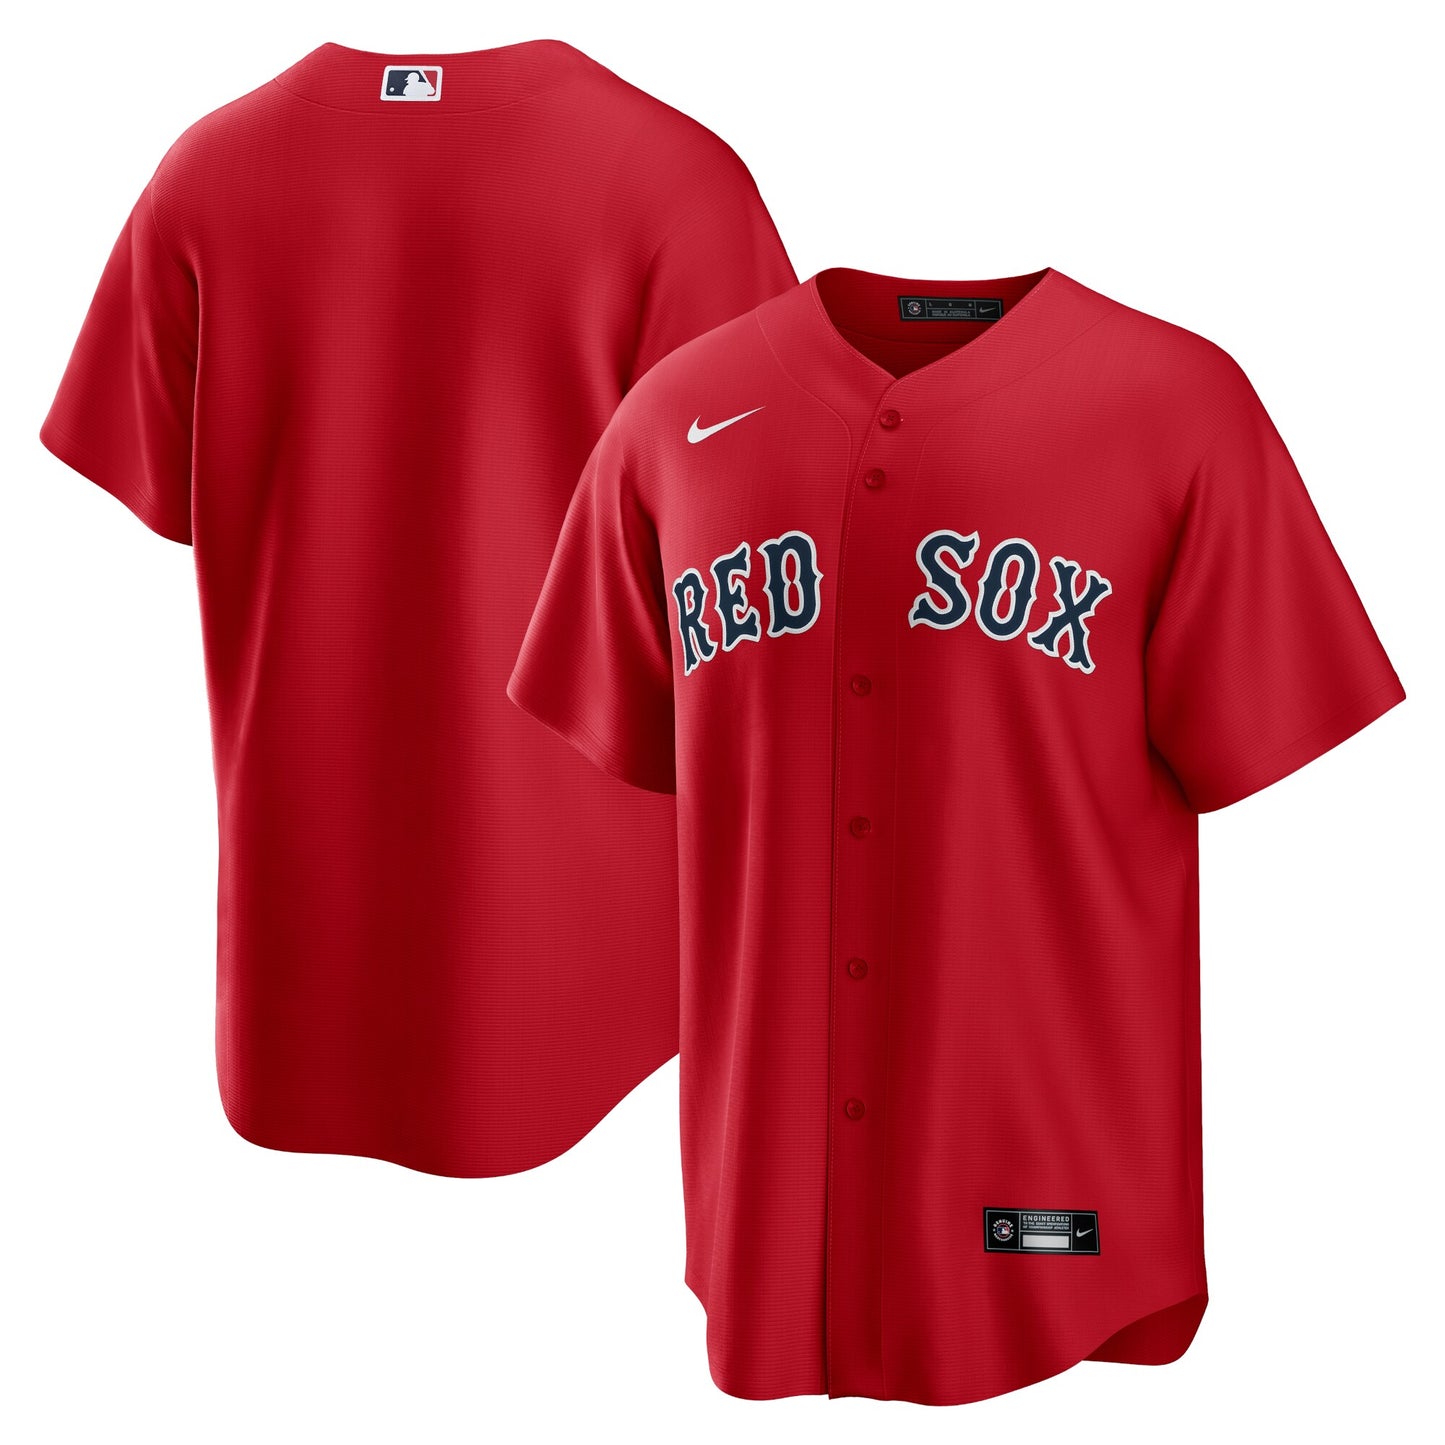 Boston Red Sox Nike Alternate Replica Team Jersey - Red